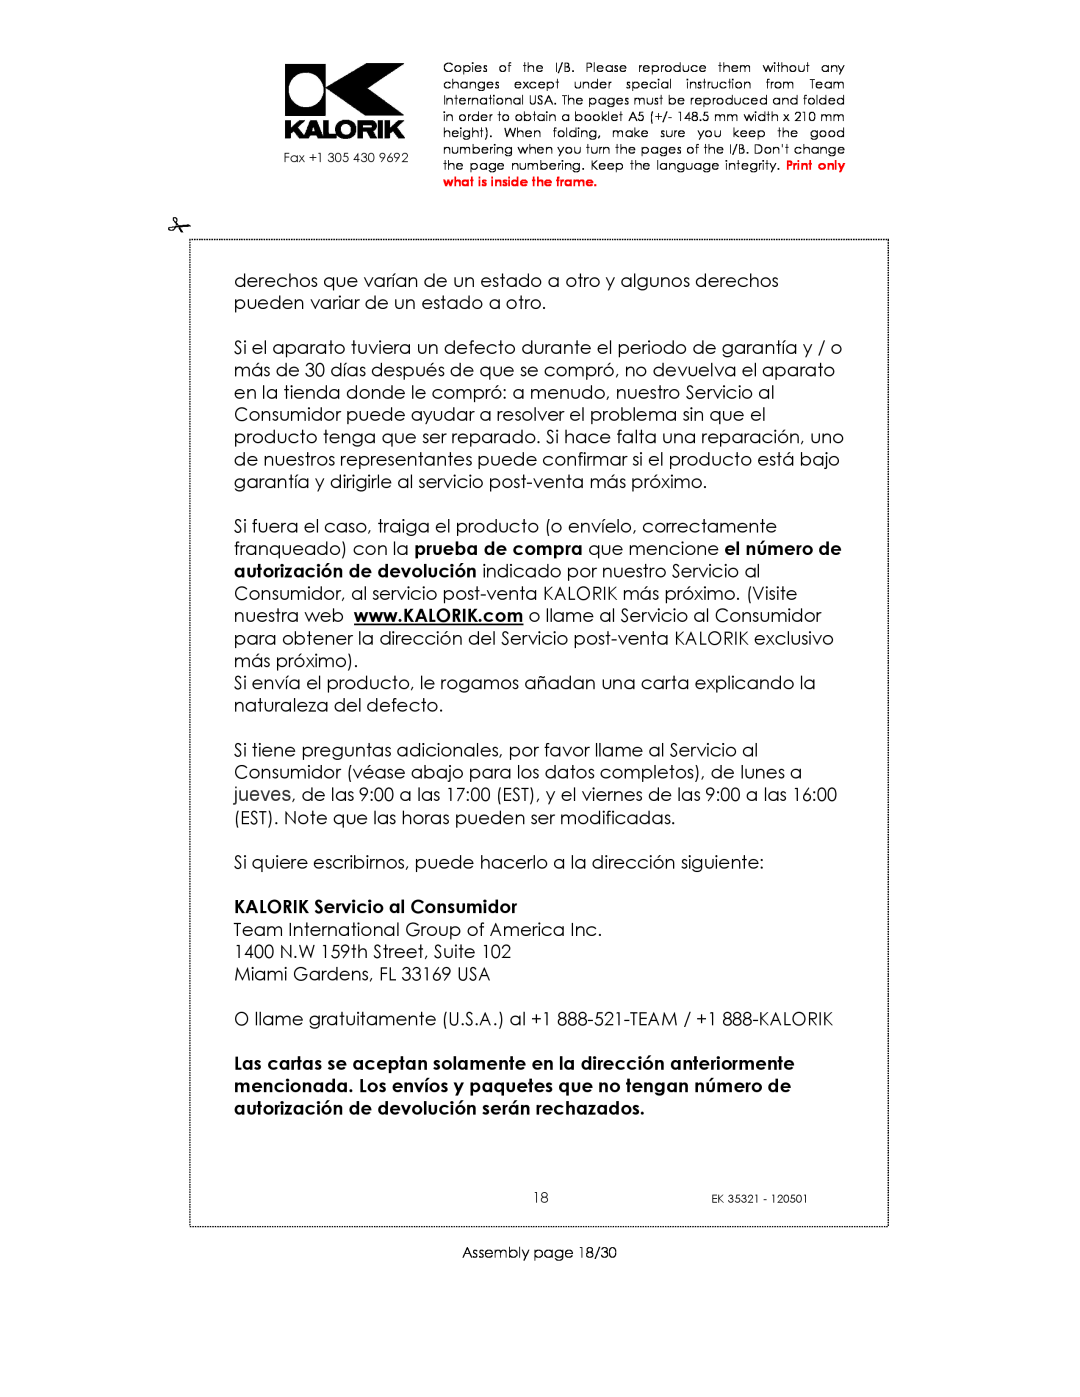 Kalorik EK35321 manual KALORIK Servicio al Consumidor, Assembly page 18/30 